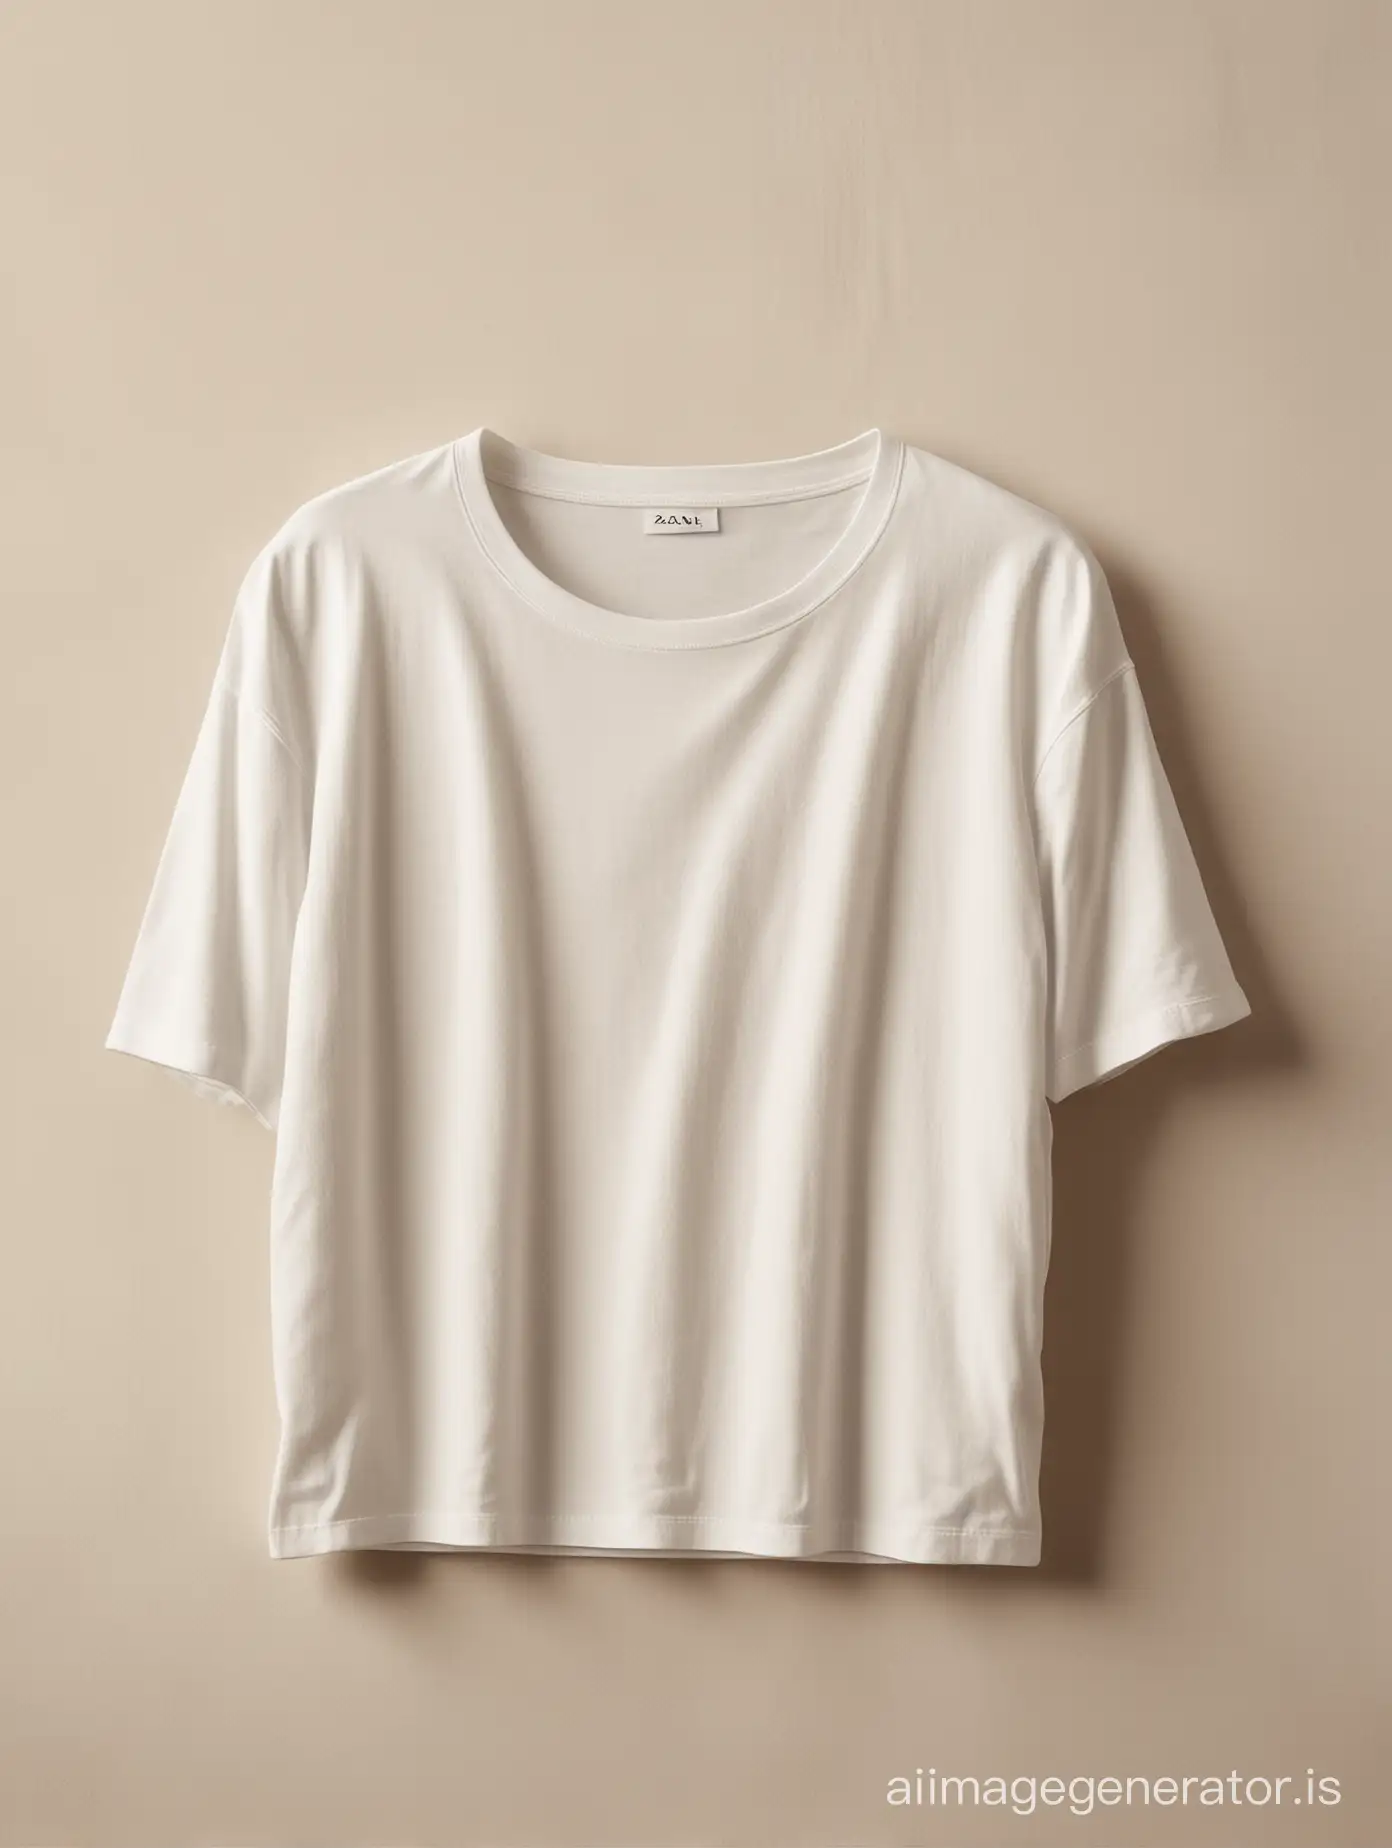 Crisp-White-Cotton-TShirt-in-Warm-Sunlight-Zara-Catalog-Style